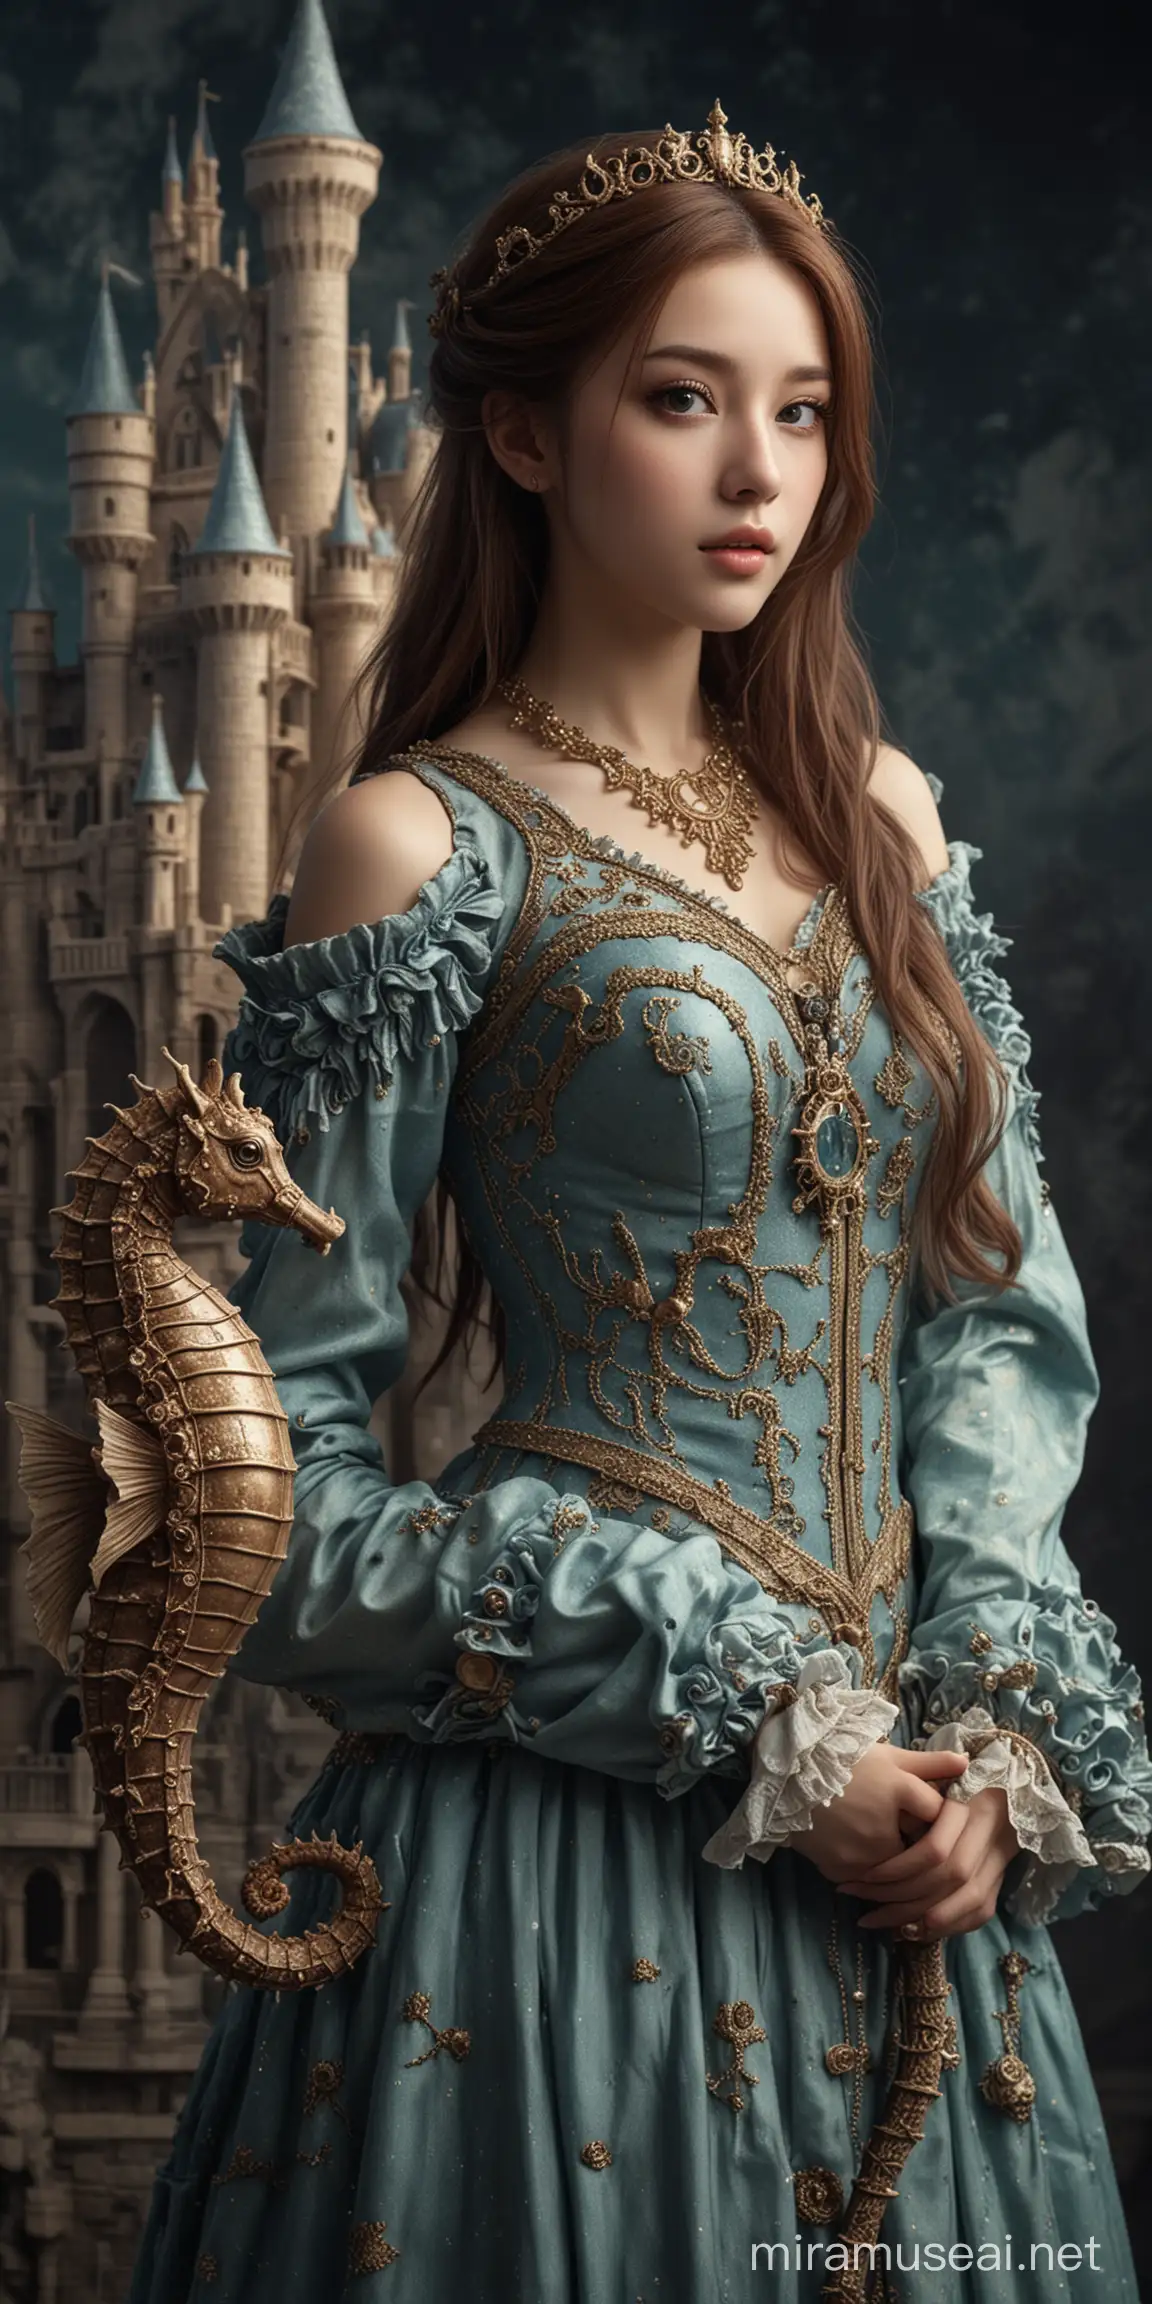 Beautiful Idol Girl with Seahorse Element in Castle Studio Portrait